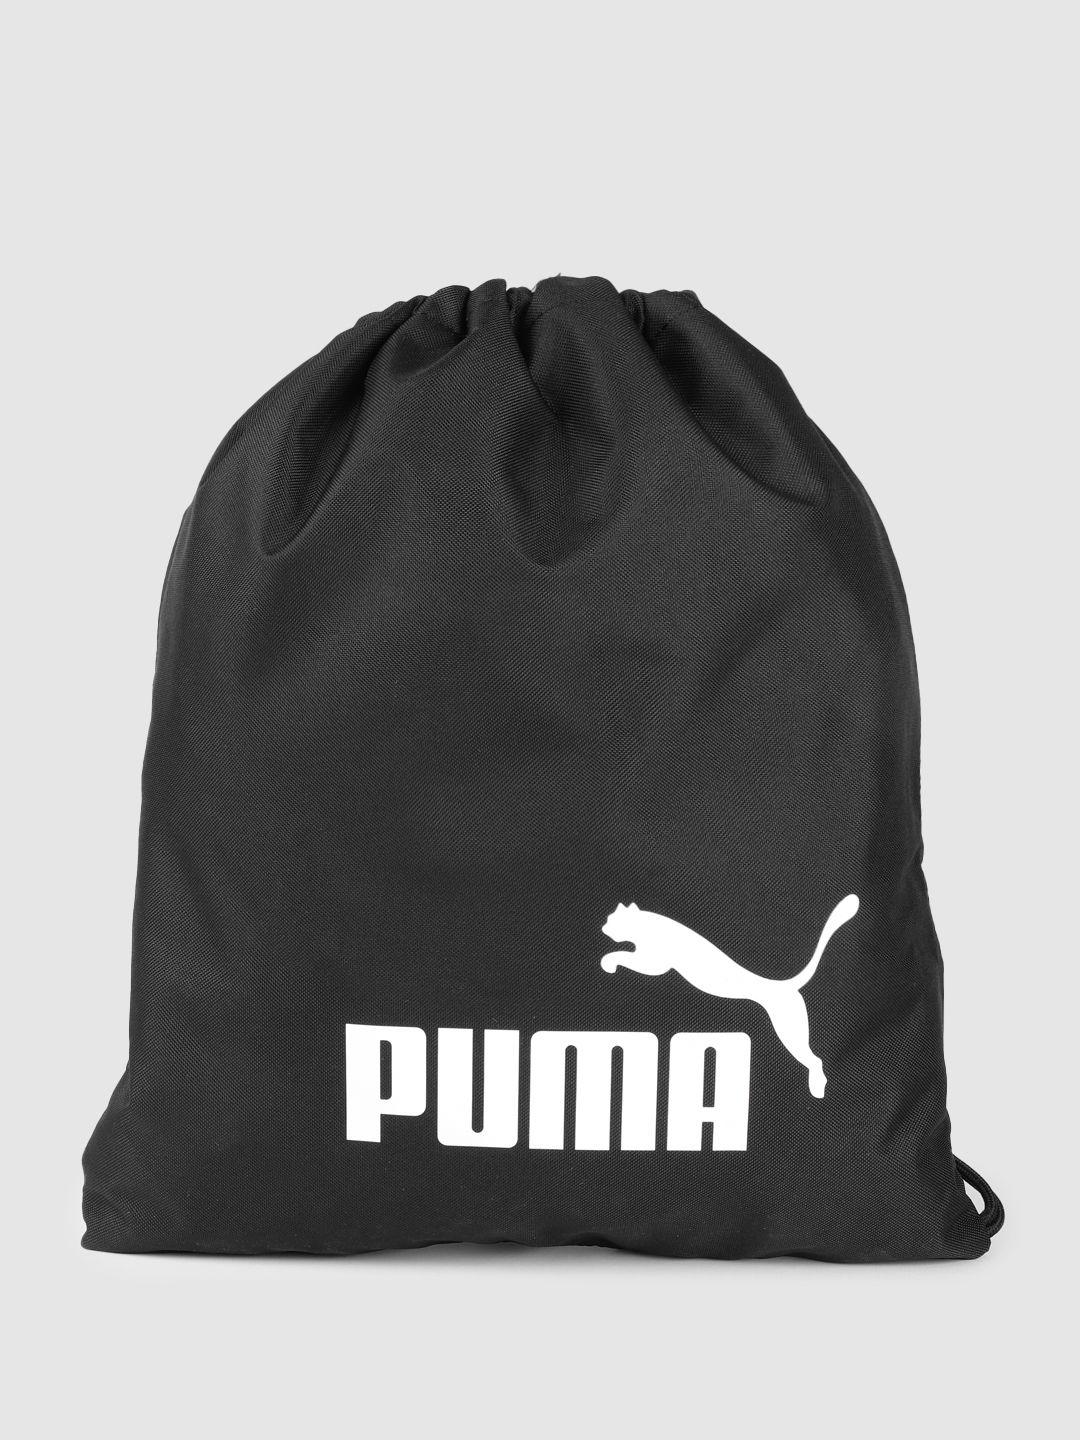 puma-unisex-brand-logo-printed-gym-sack